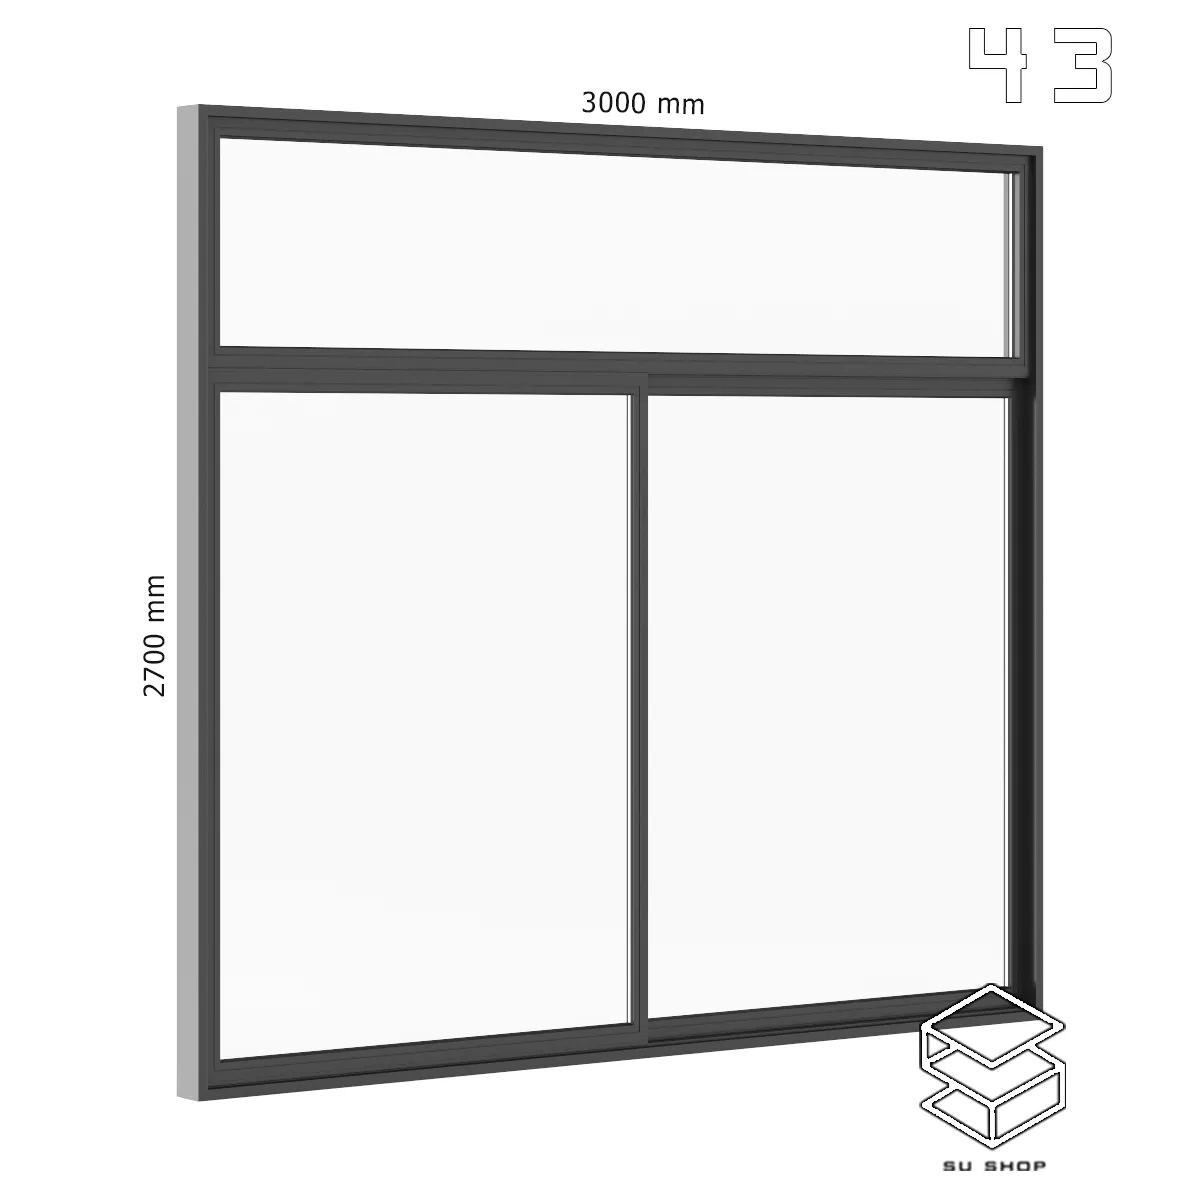 MODERN WINDOWS - SKETCHUP 3D MODEL - VRAY OR ENSCAPE - ID16785